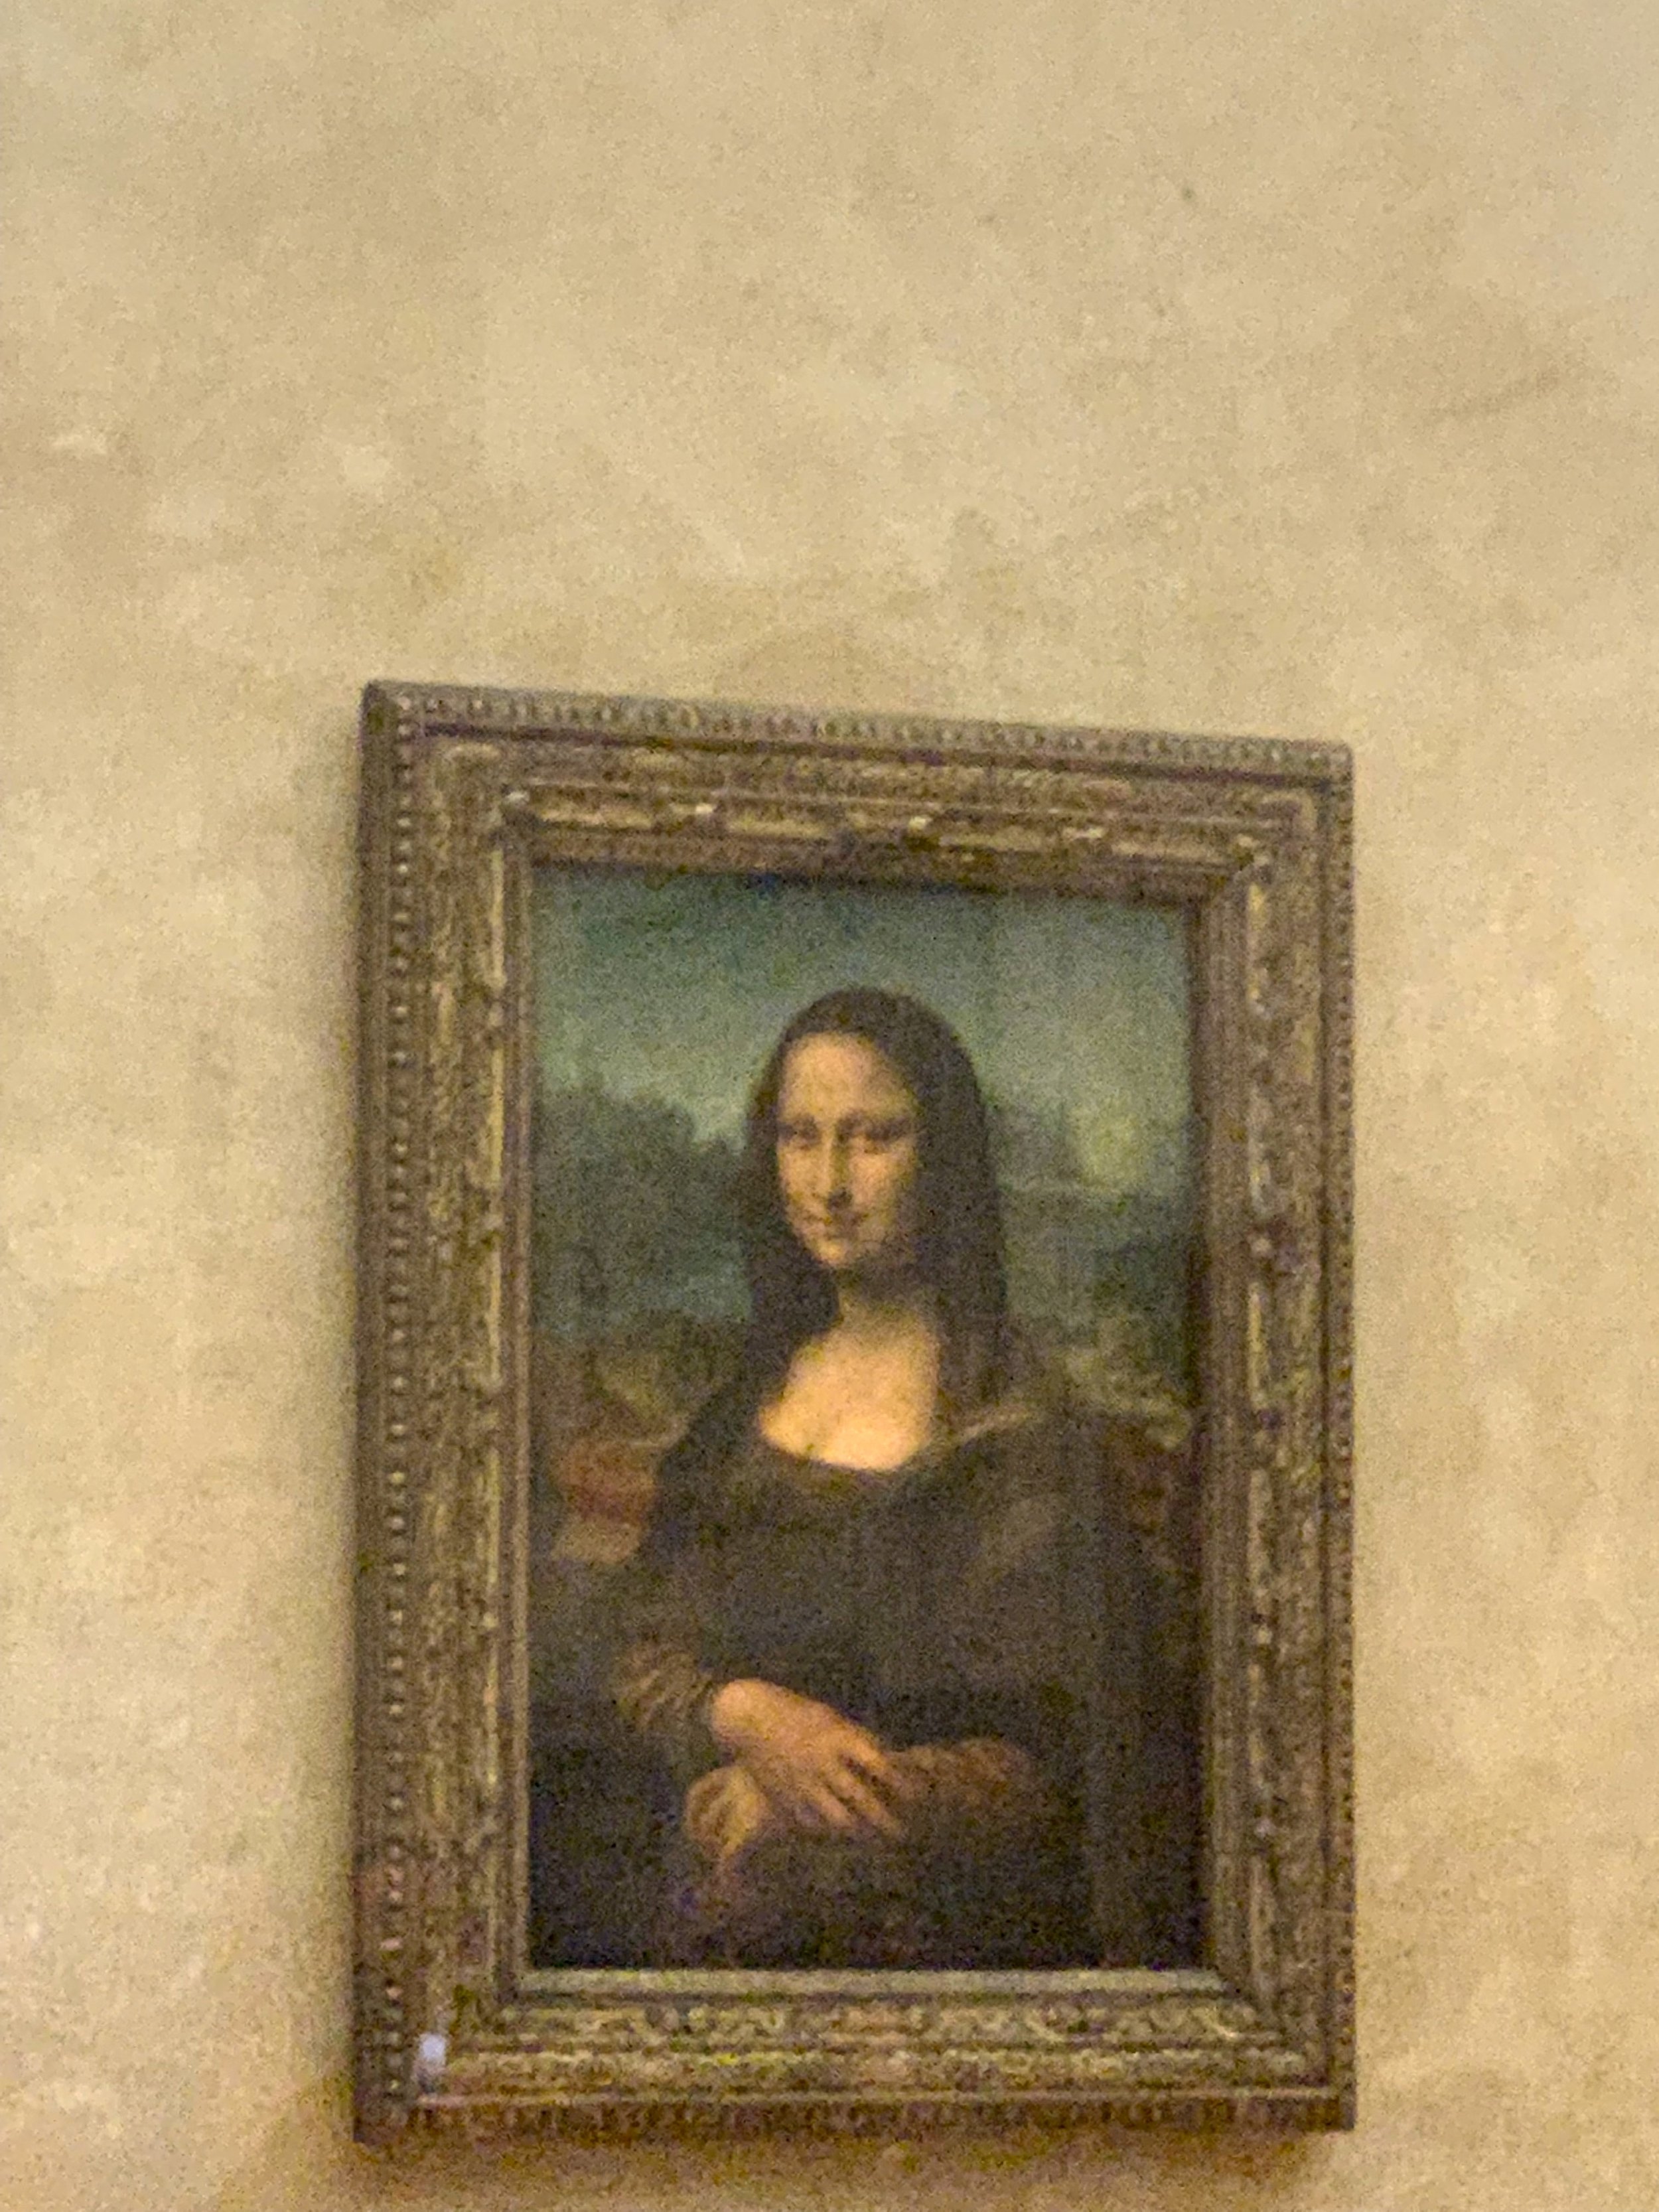 Devi Ohira Louvre museum Paris art Mona Lisa iconic attraction free entry tickets.JPG